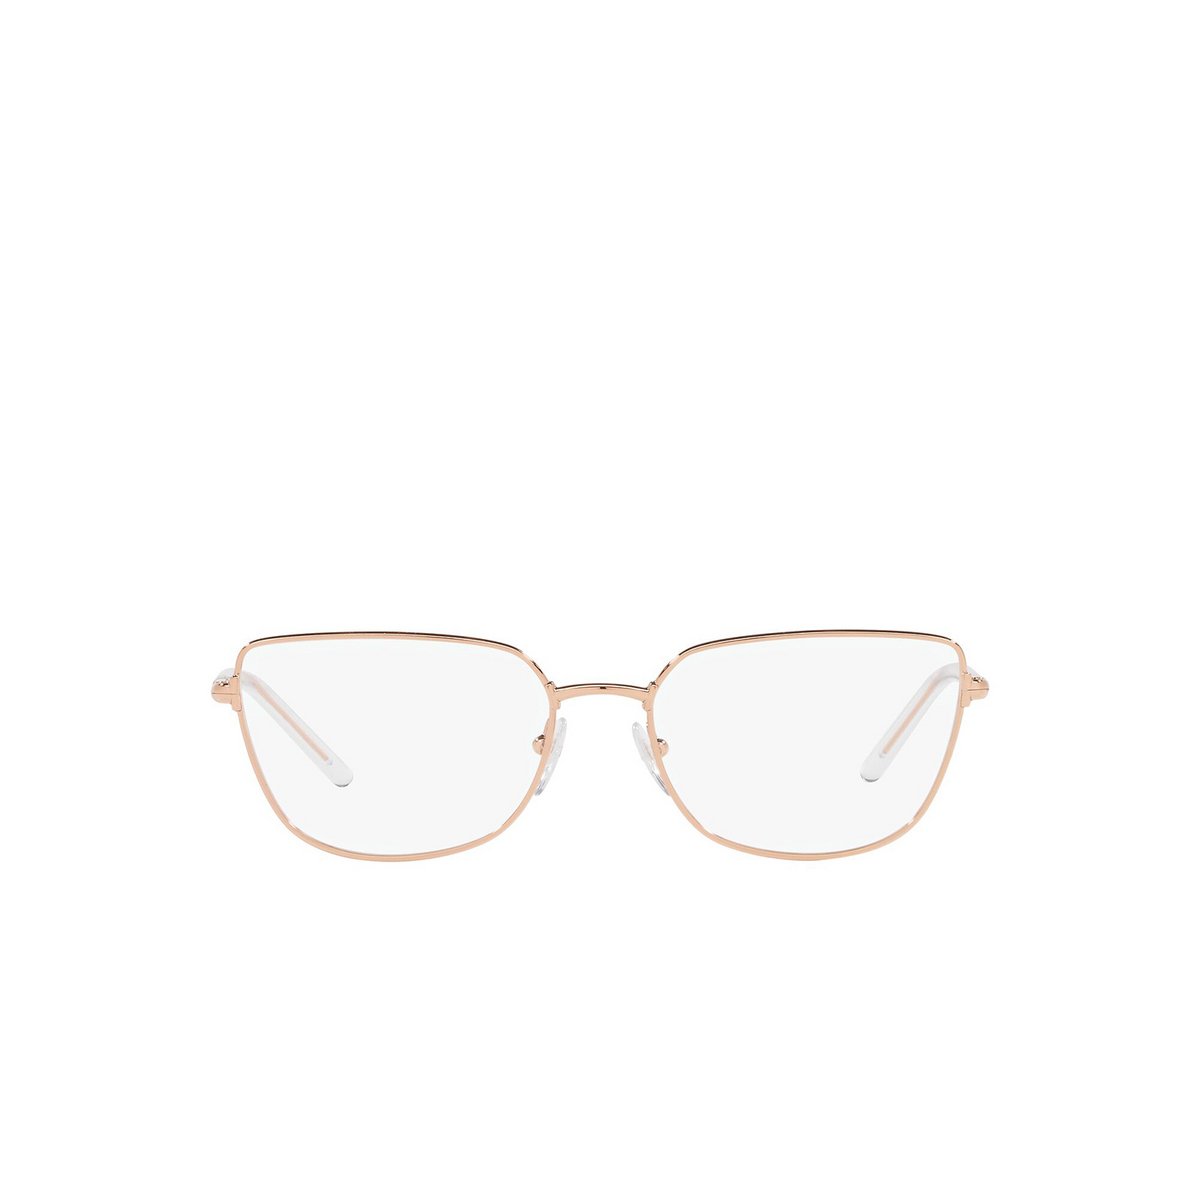 Prada® Butterfly Eyeglasses: PR 59YV color Pink Gold SVF1O1 - front view.